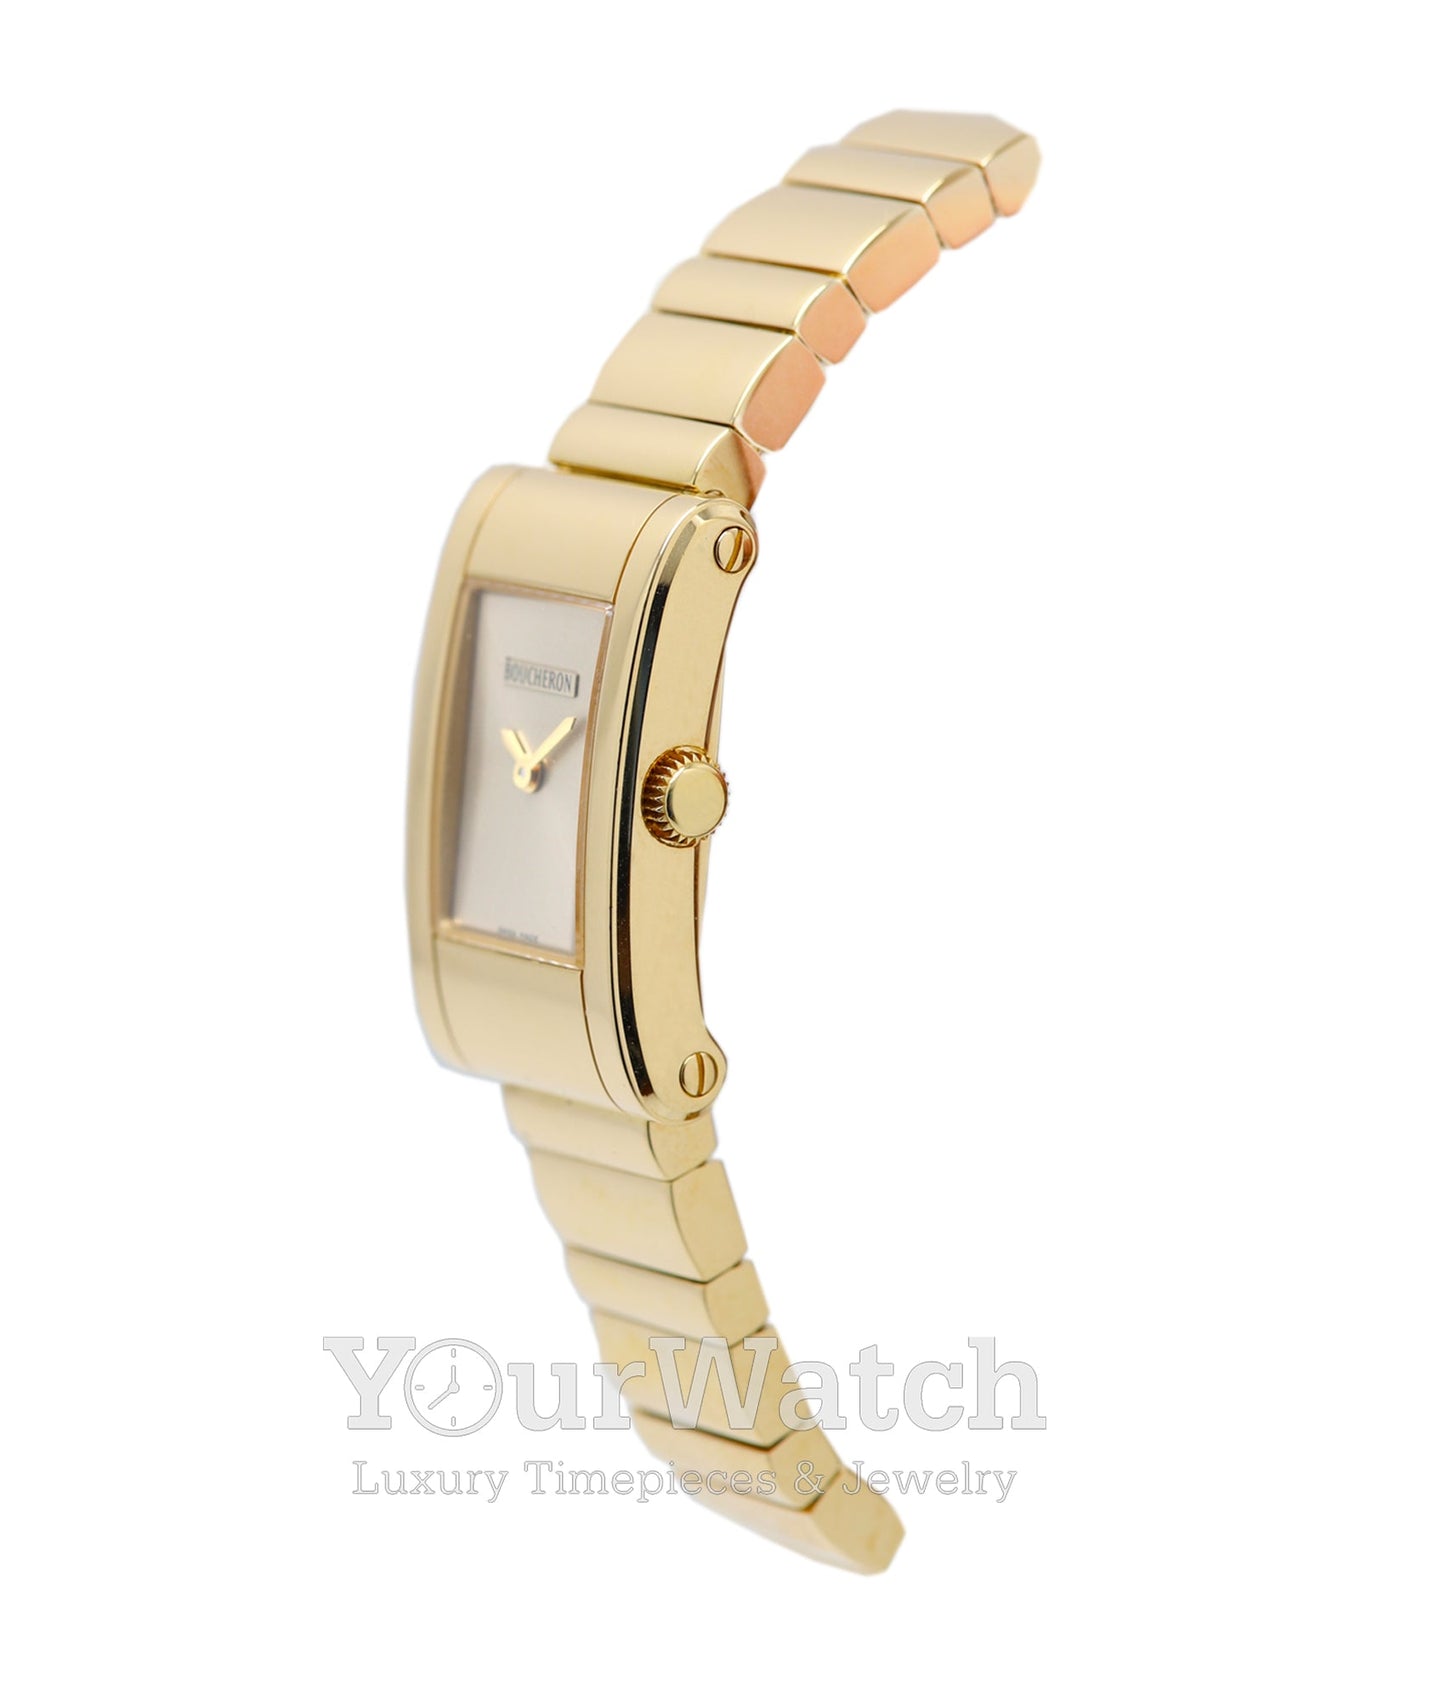 Boucheron Reflet 18KT Gold Watch